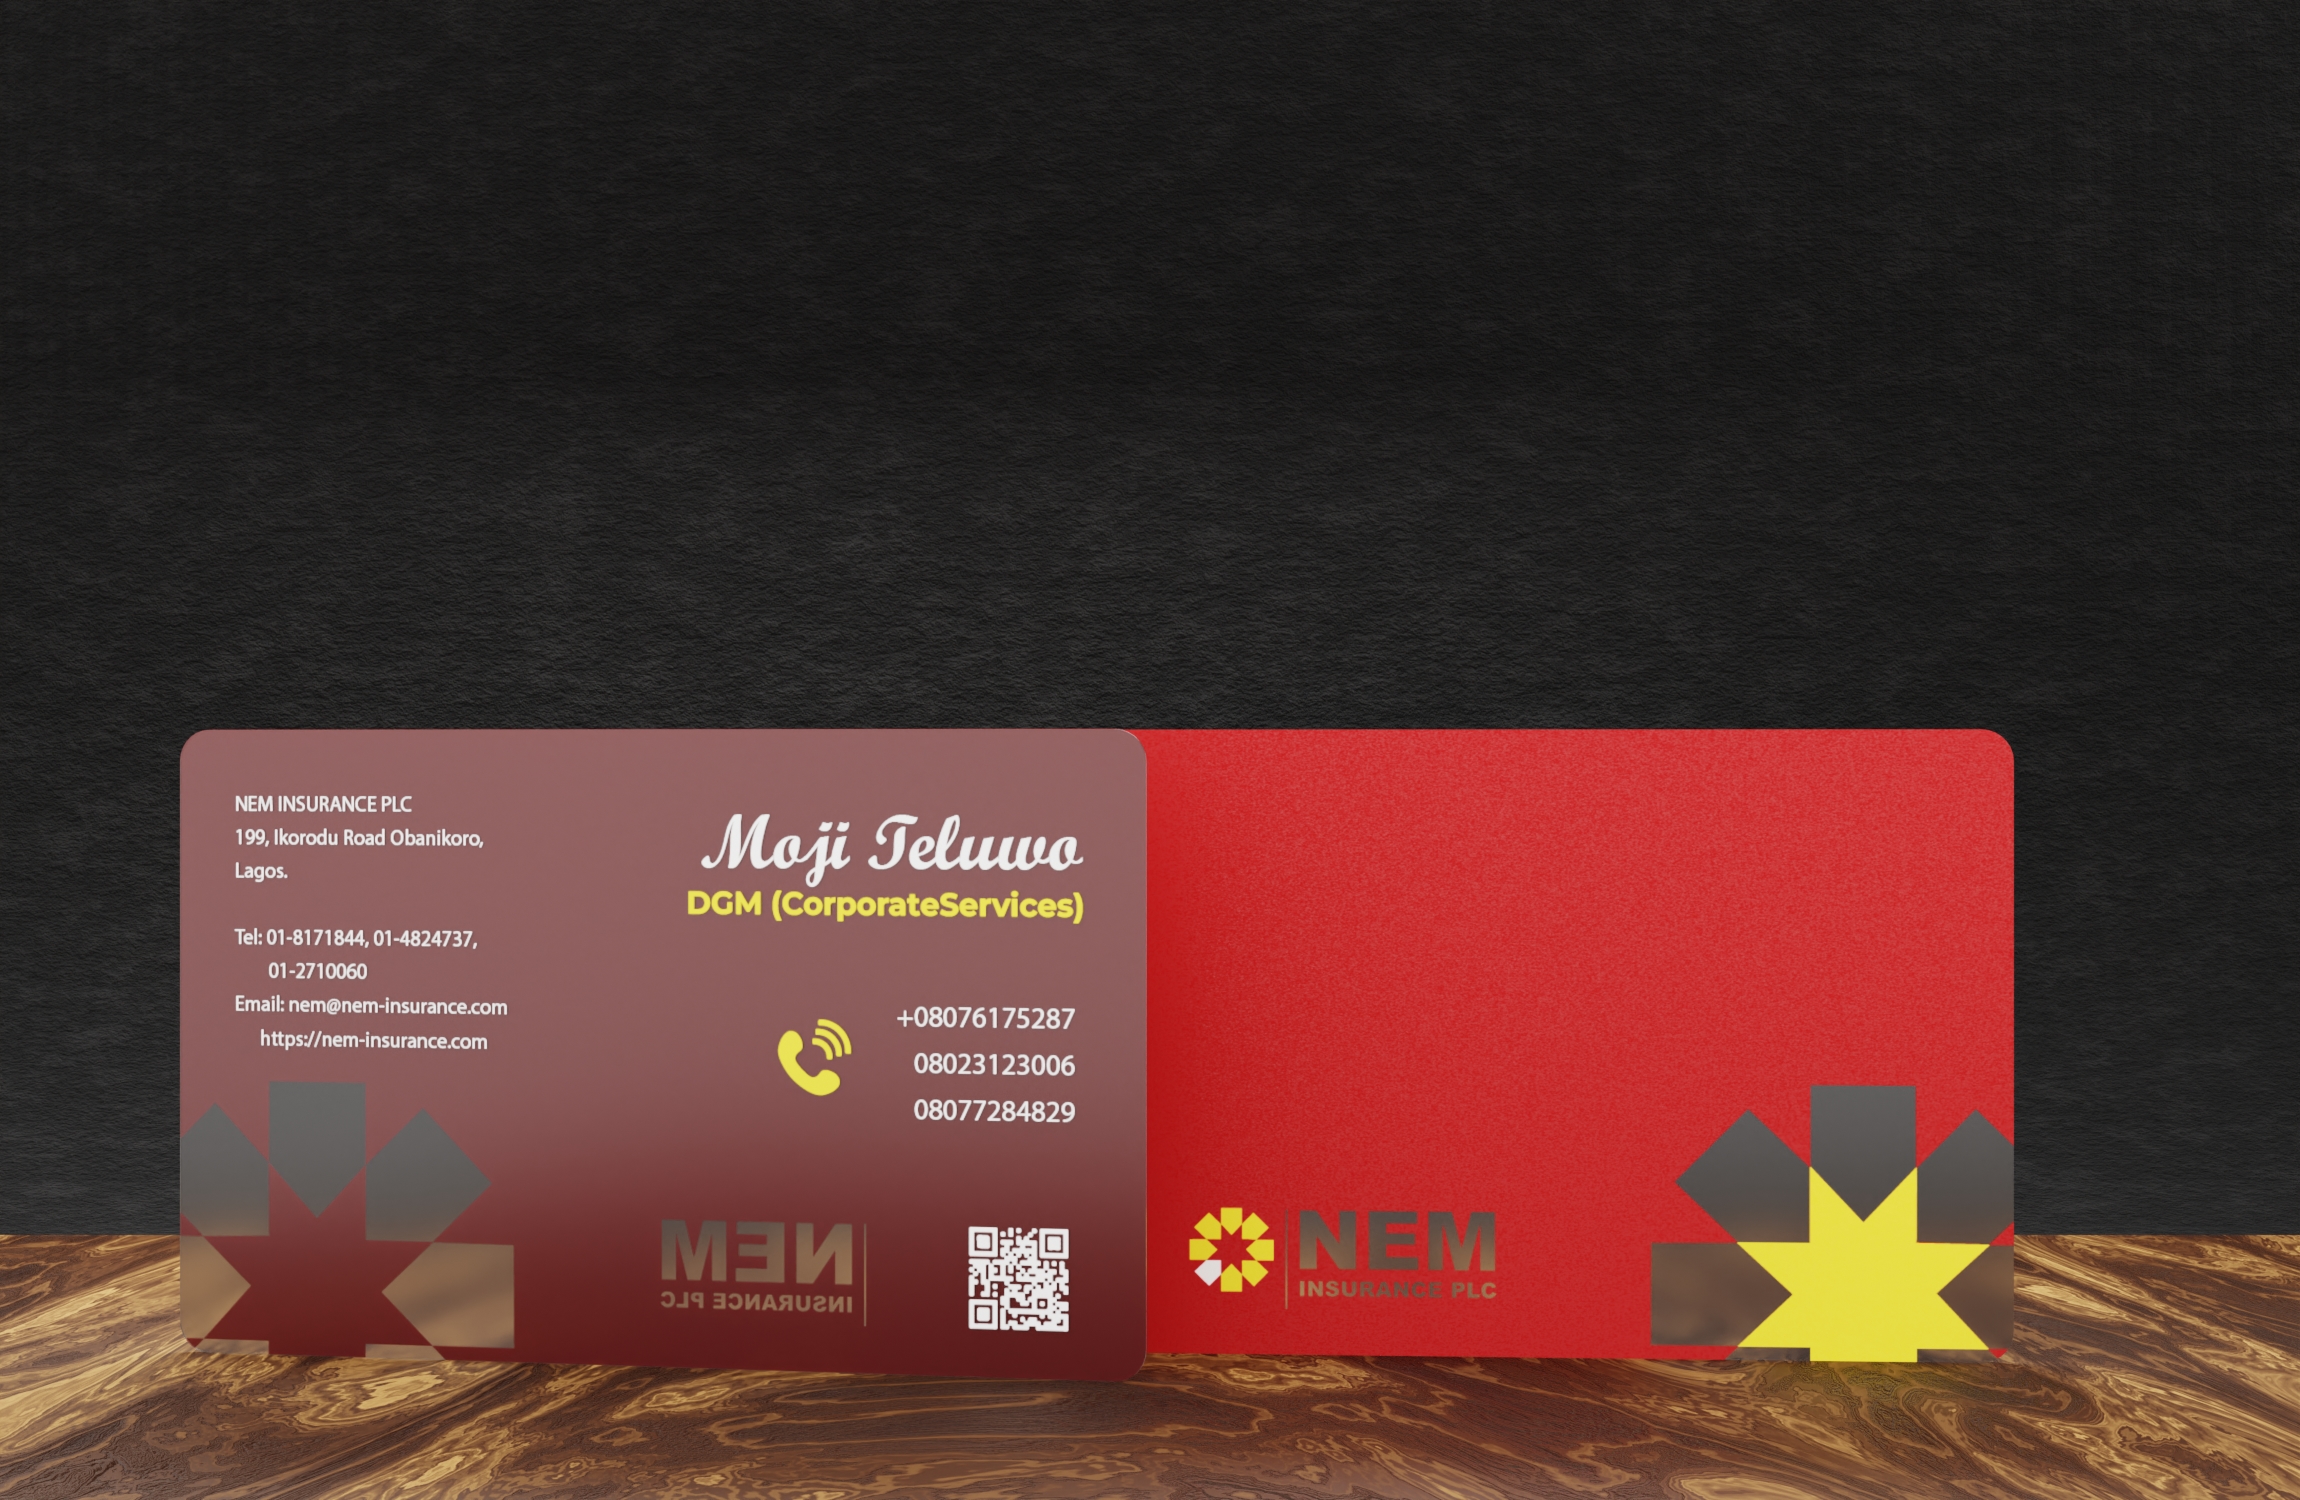 NEM Insurance Translucent Business Card sample